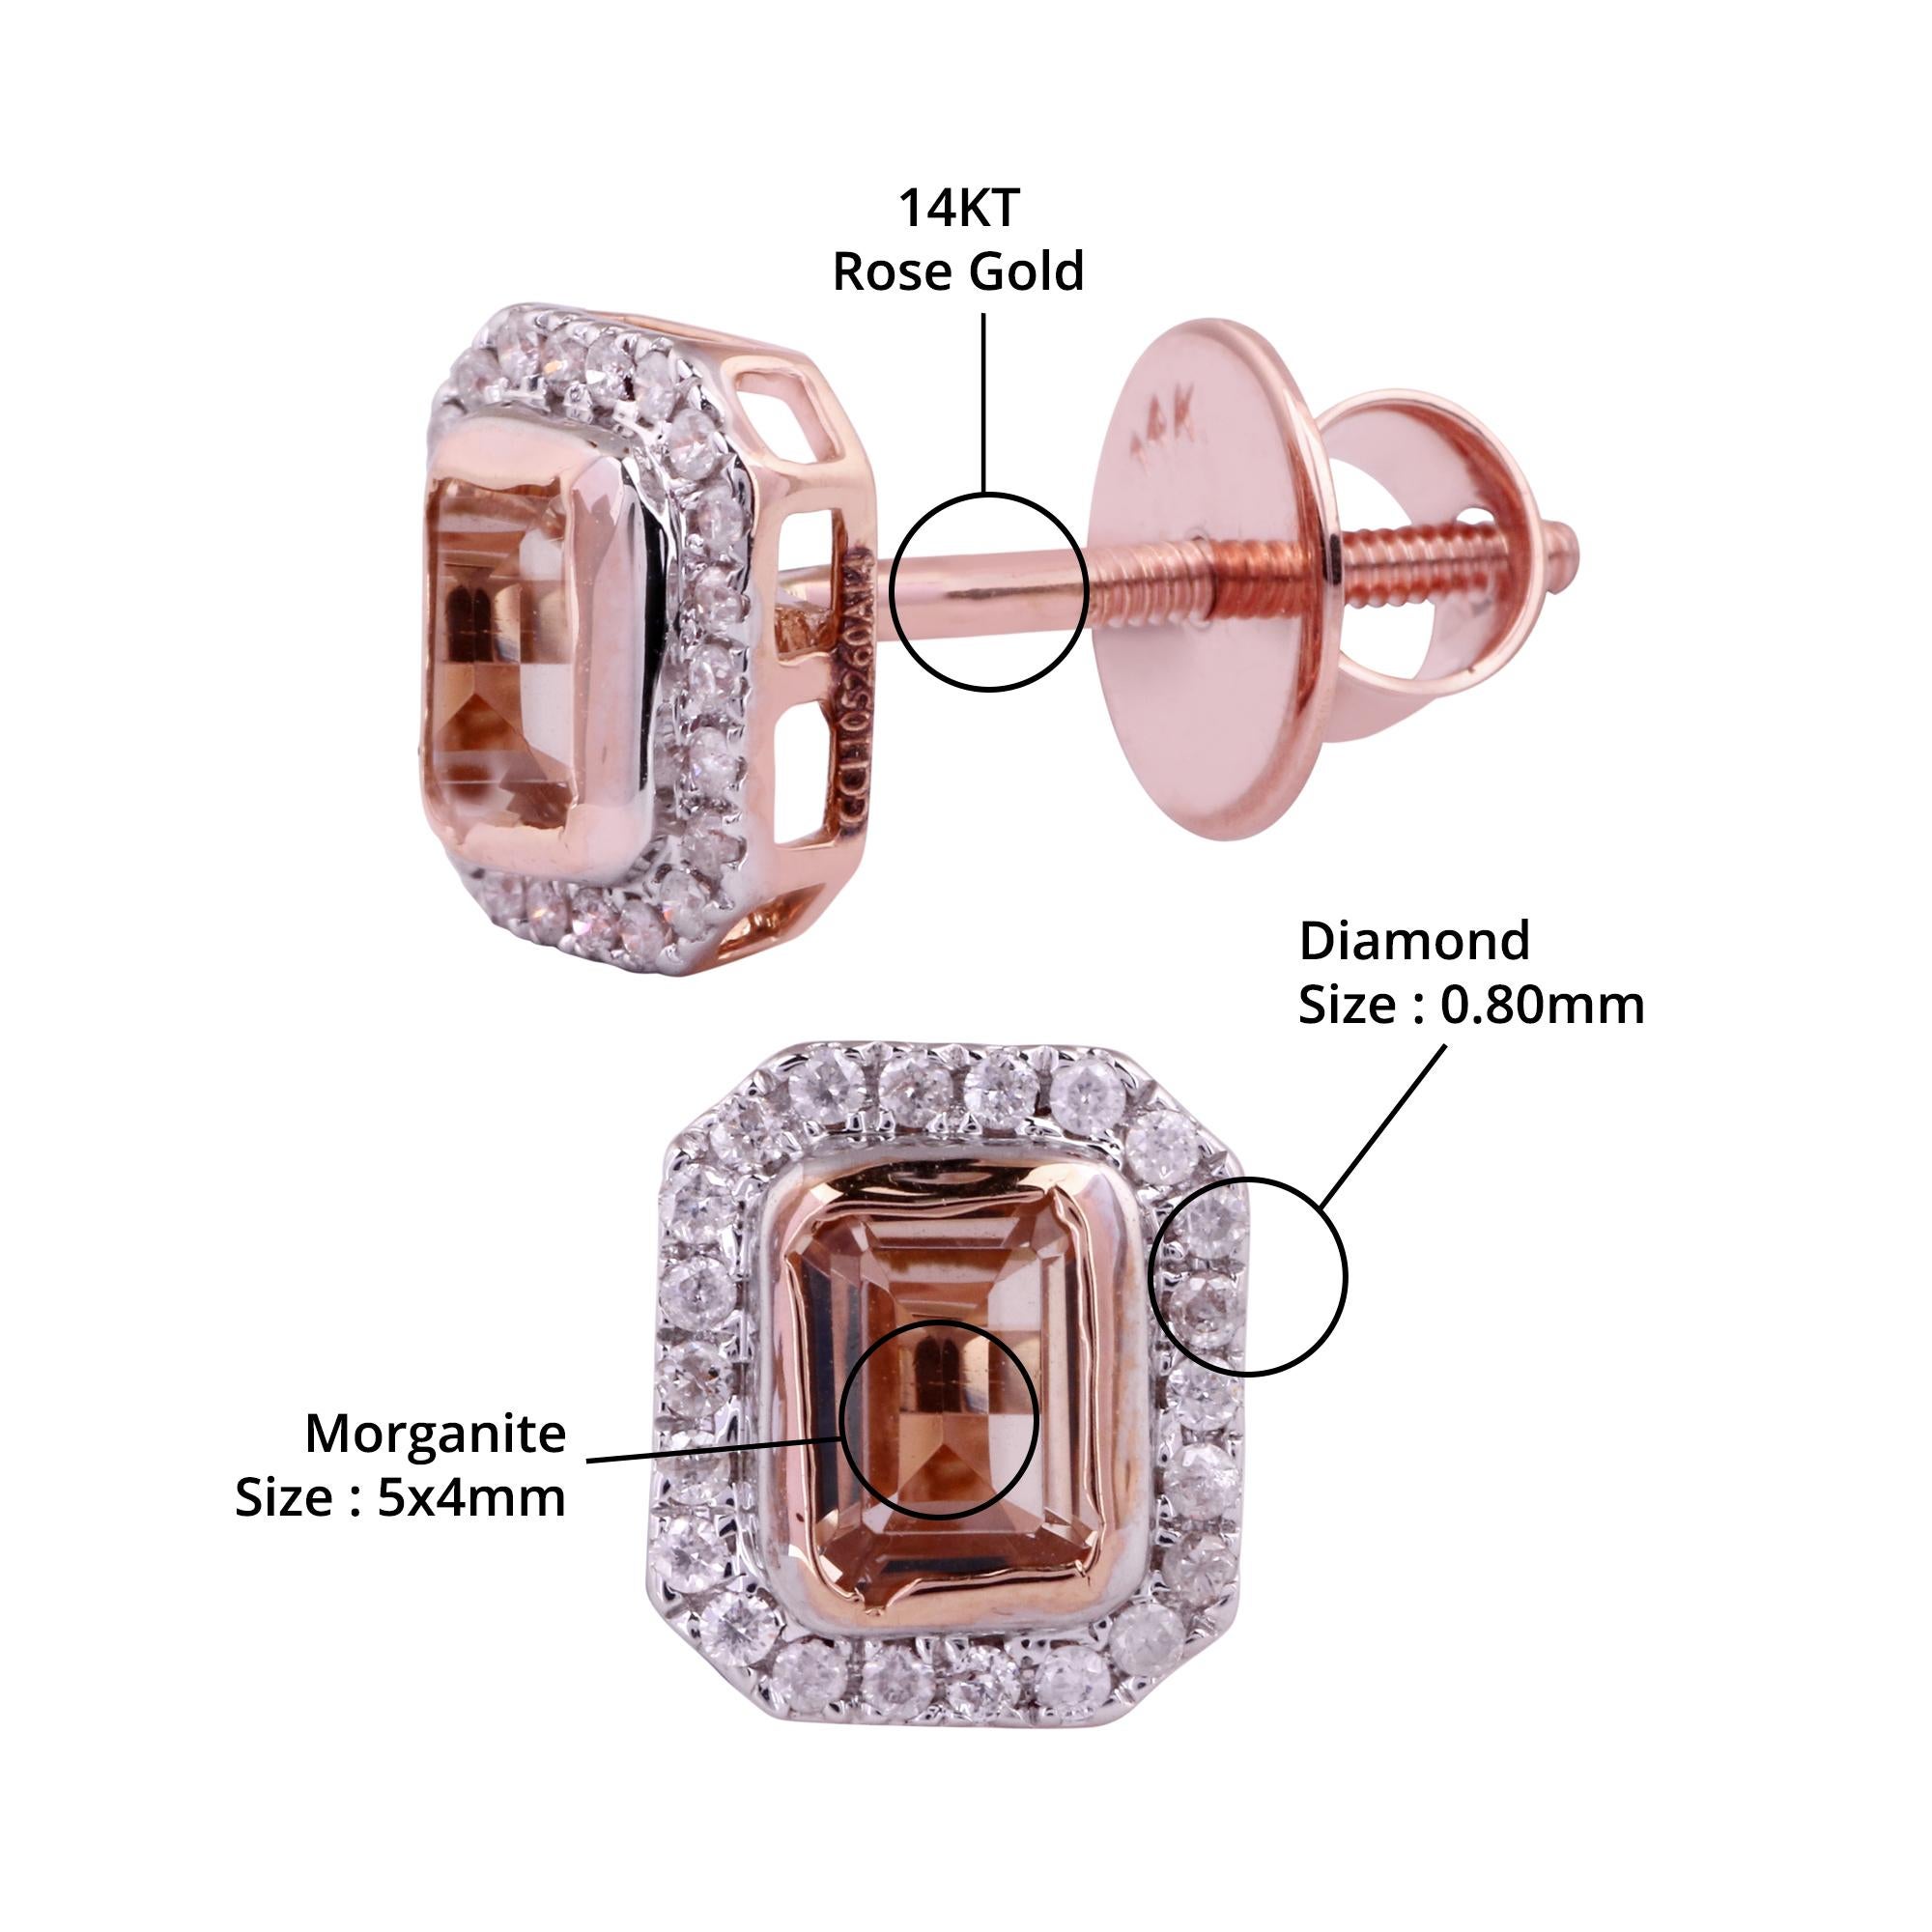 Item details:-

✦ SKU:- JER00728RRR

✦ Material :- Gold

✦ Metal Purity : 14K Rose Gold 

✦ Gemstone Specification:-
✧ Clear Diamond (l1/HI) Round - 0.80mm - 44 Pcs
✧ Natural Morganite - 5x4mm - 2 Pcs


✦ Approx. Diamond Carat Weight : 0.140 Carat
✦